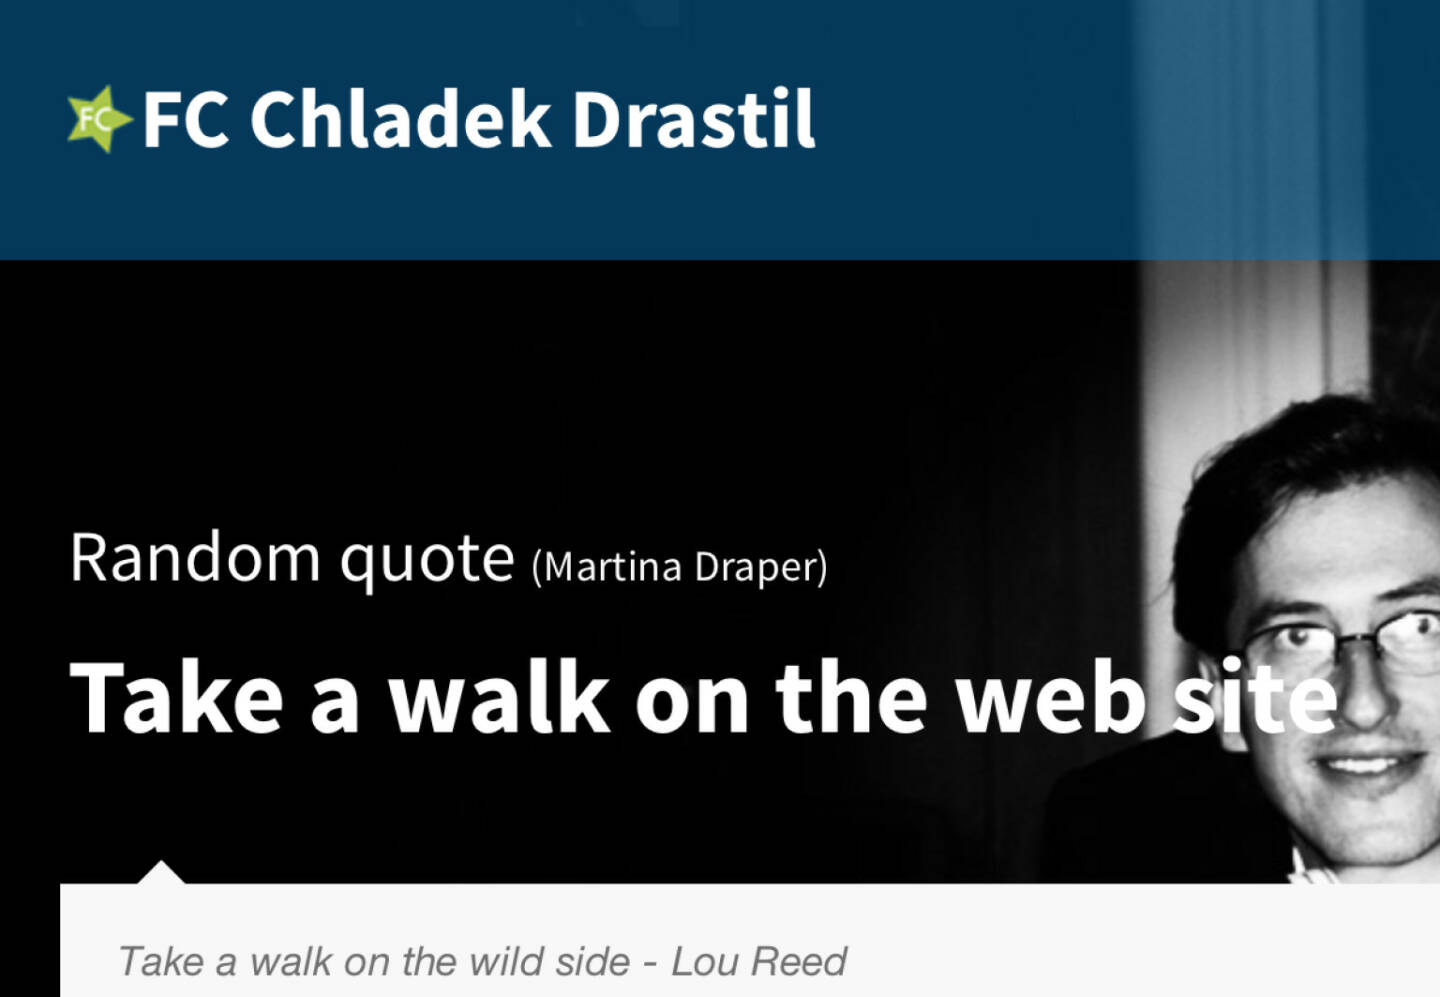 Take a walk on the web site